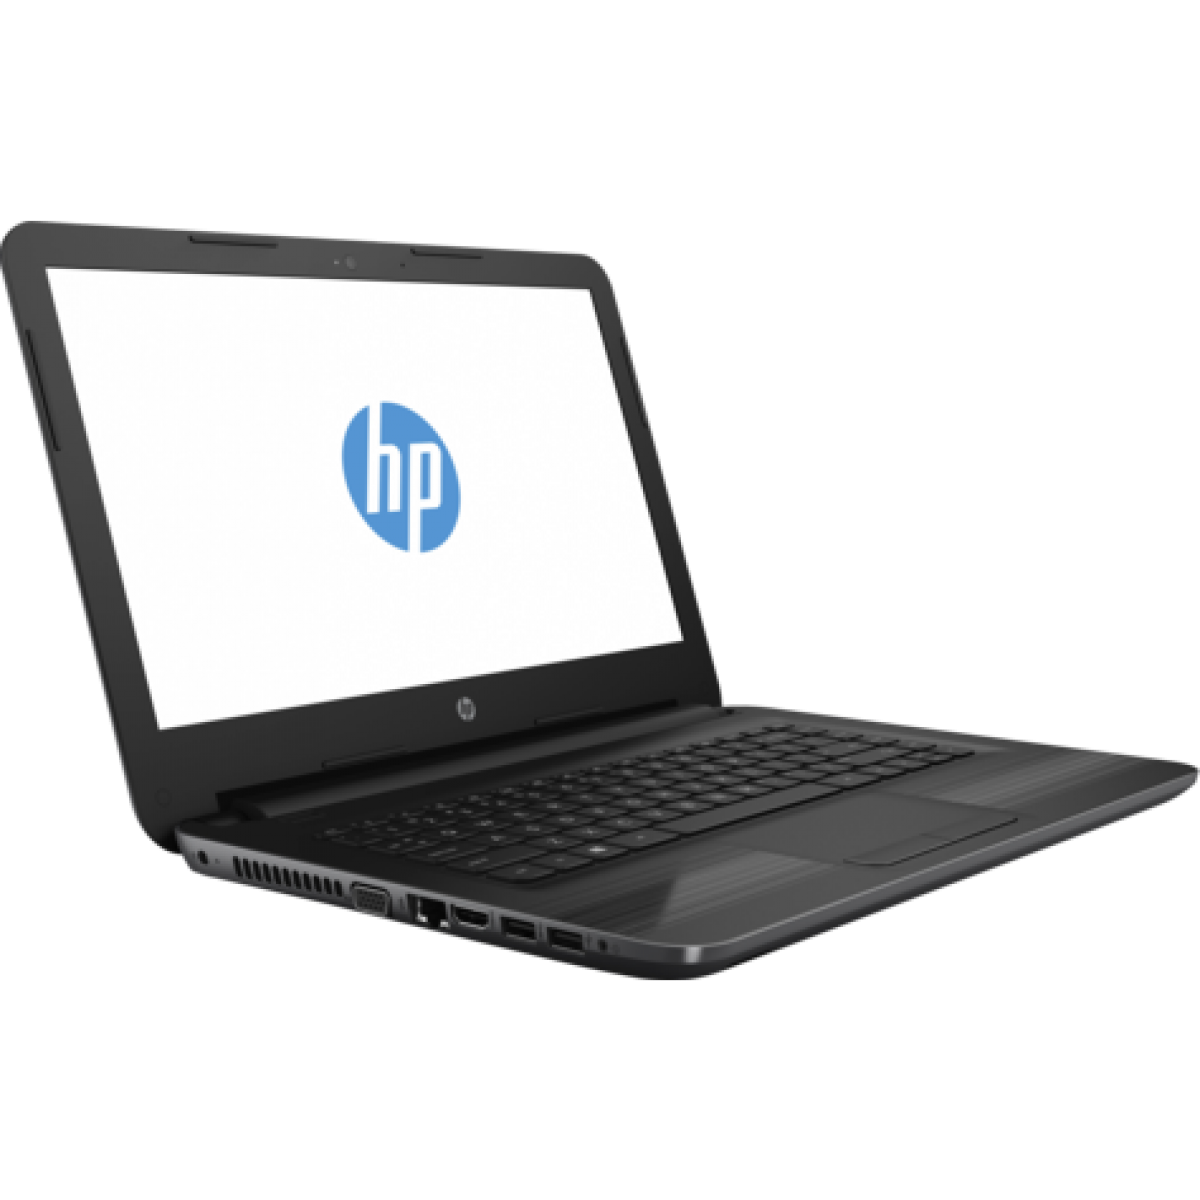 HP ноутбук PNG файл